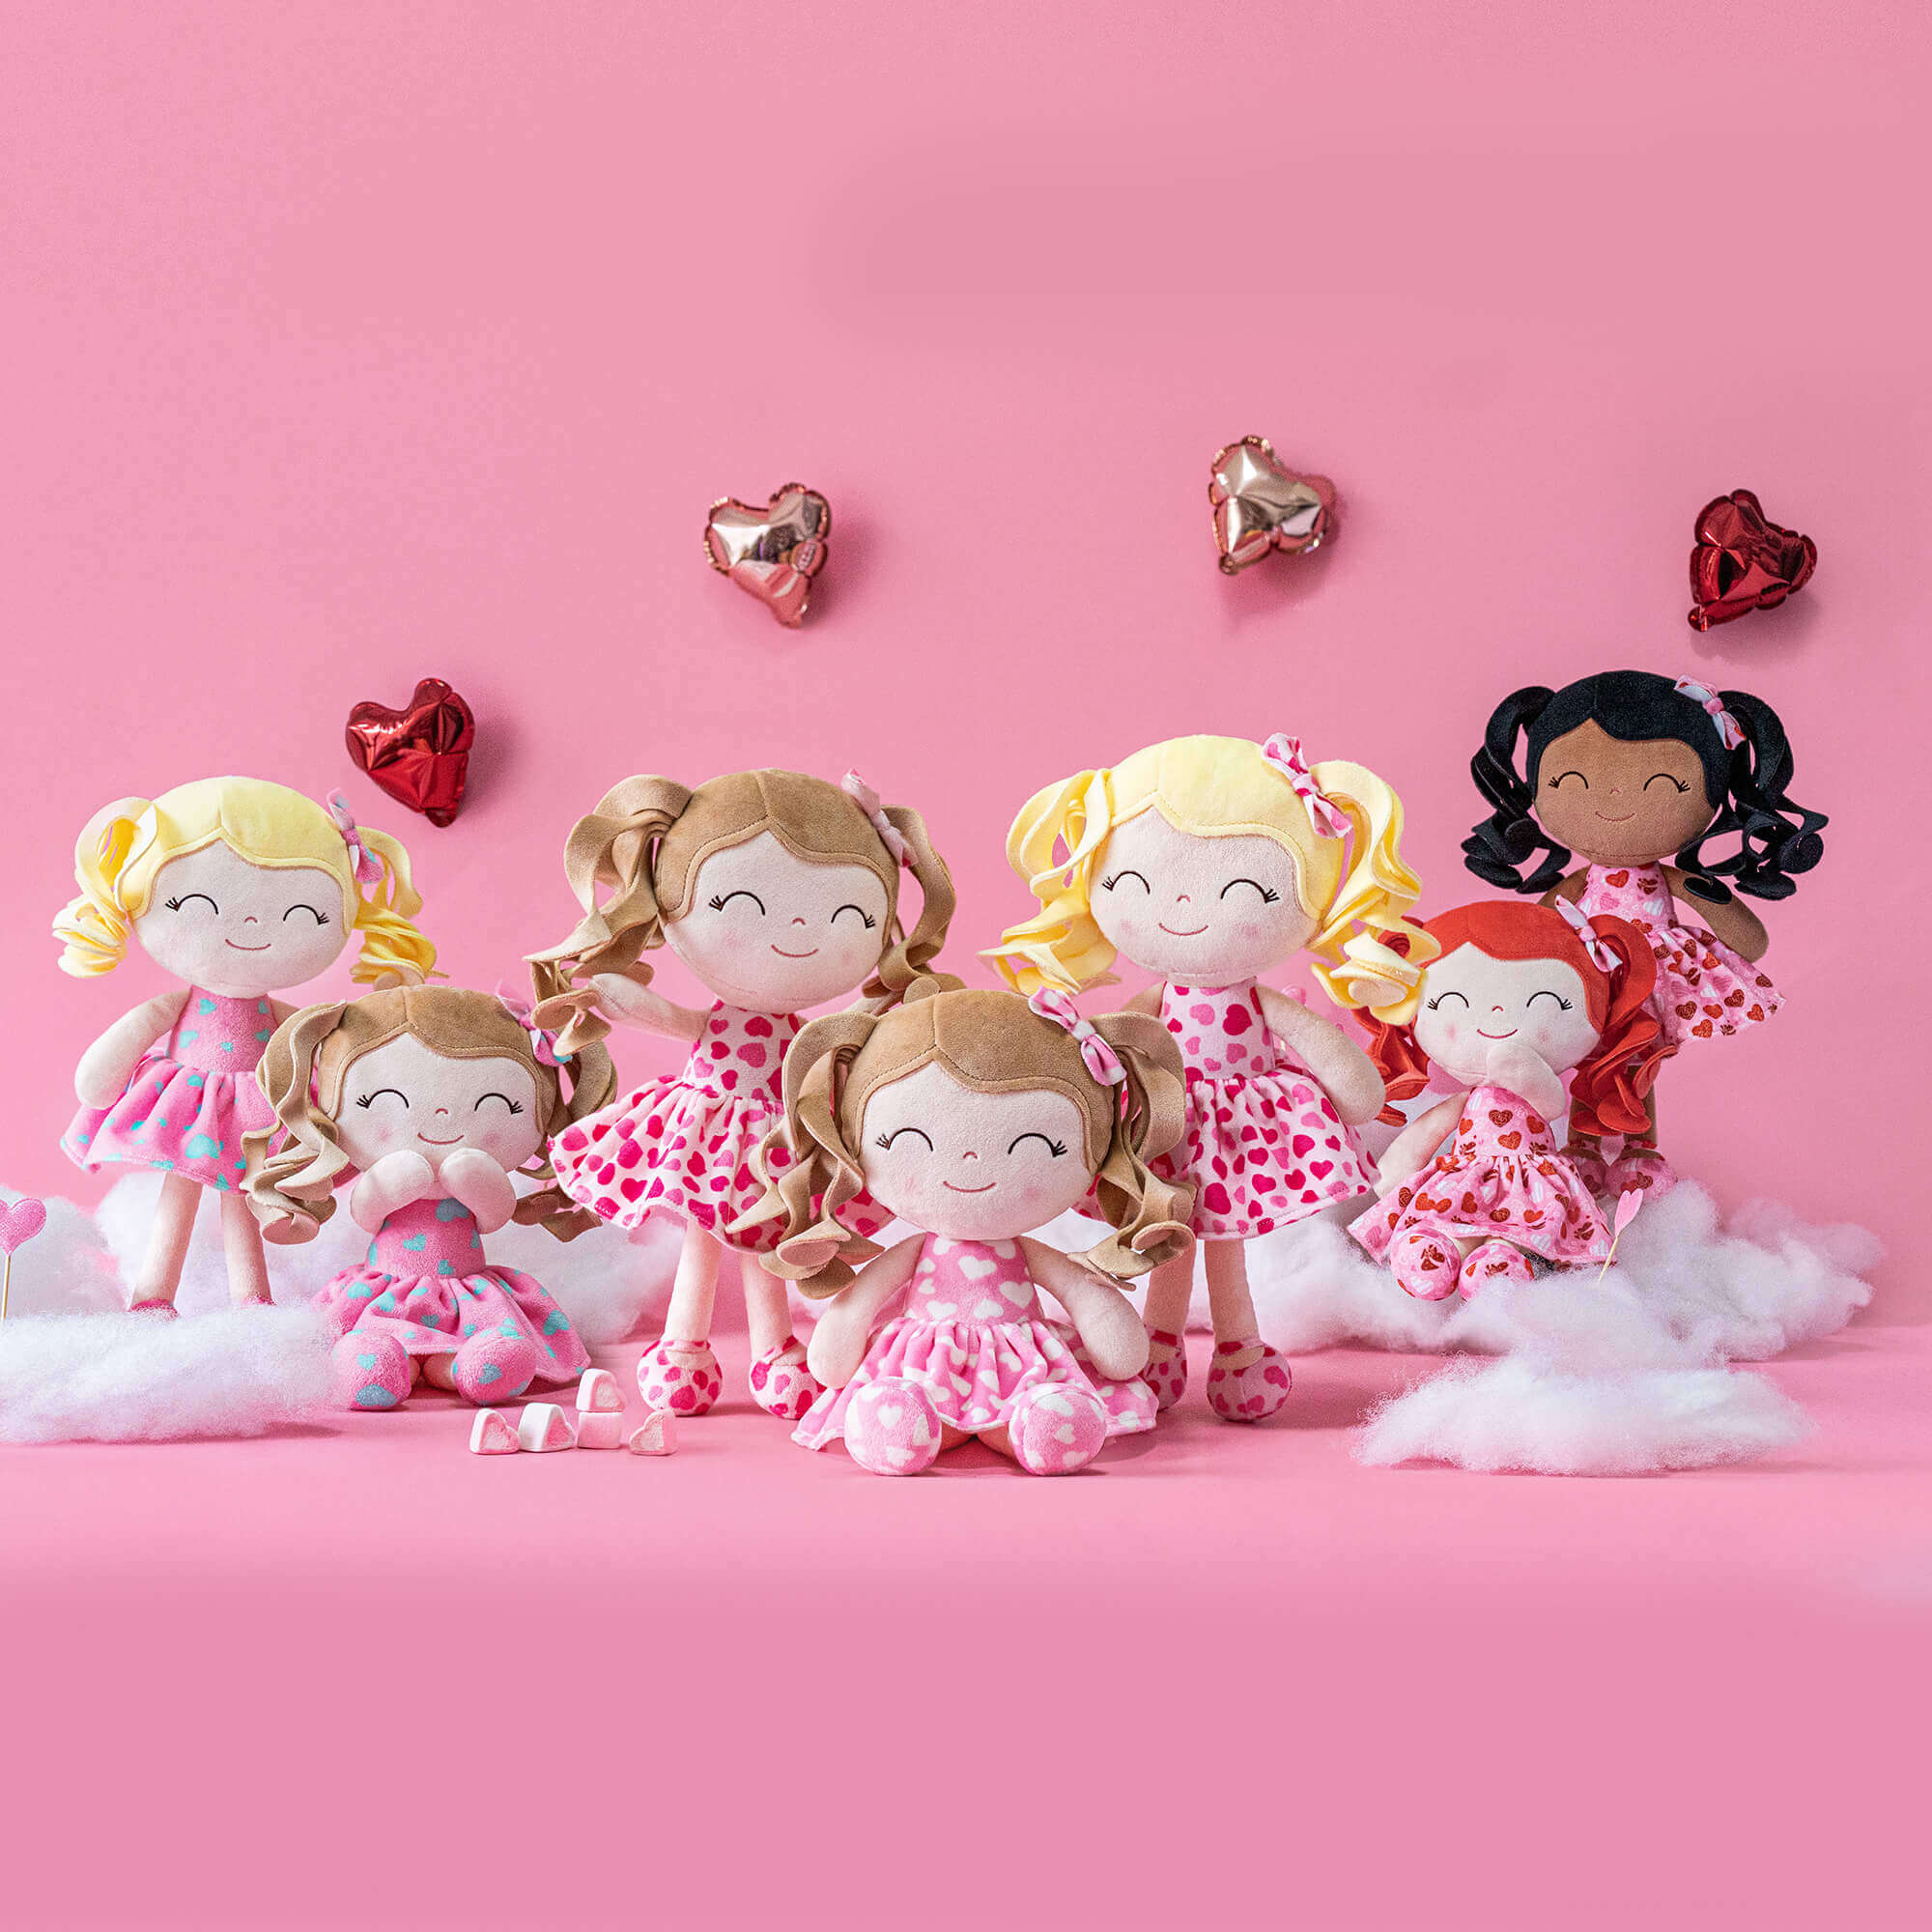 Gloveleya 12-inch Personalized Curly Hair Dolls Love Heart Dress Red Hair